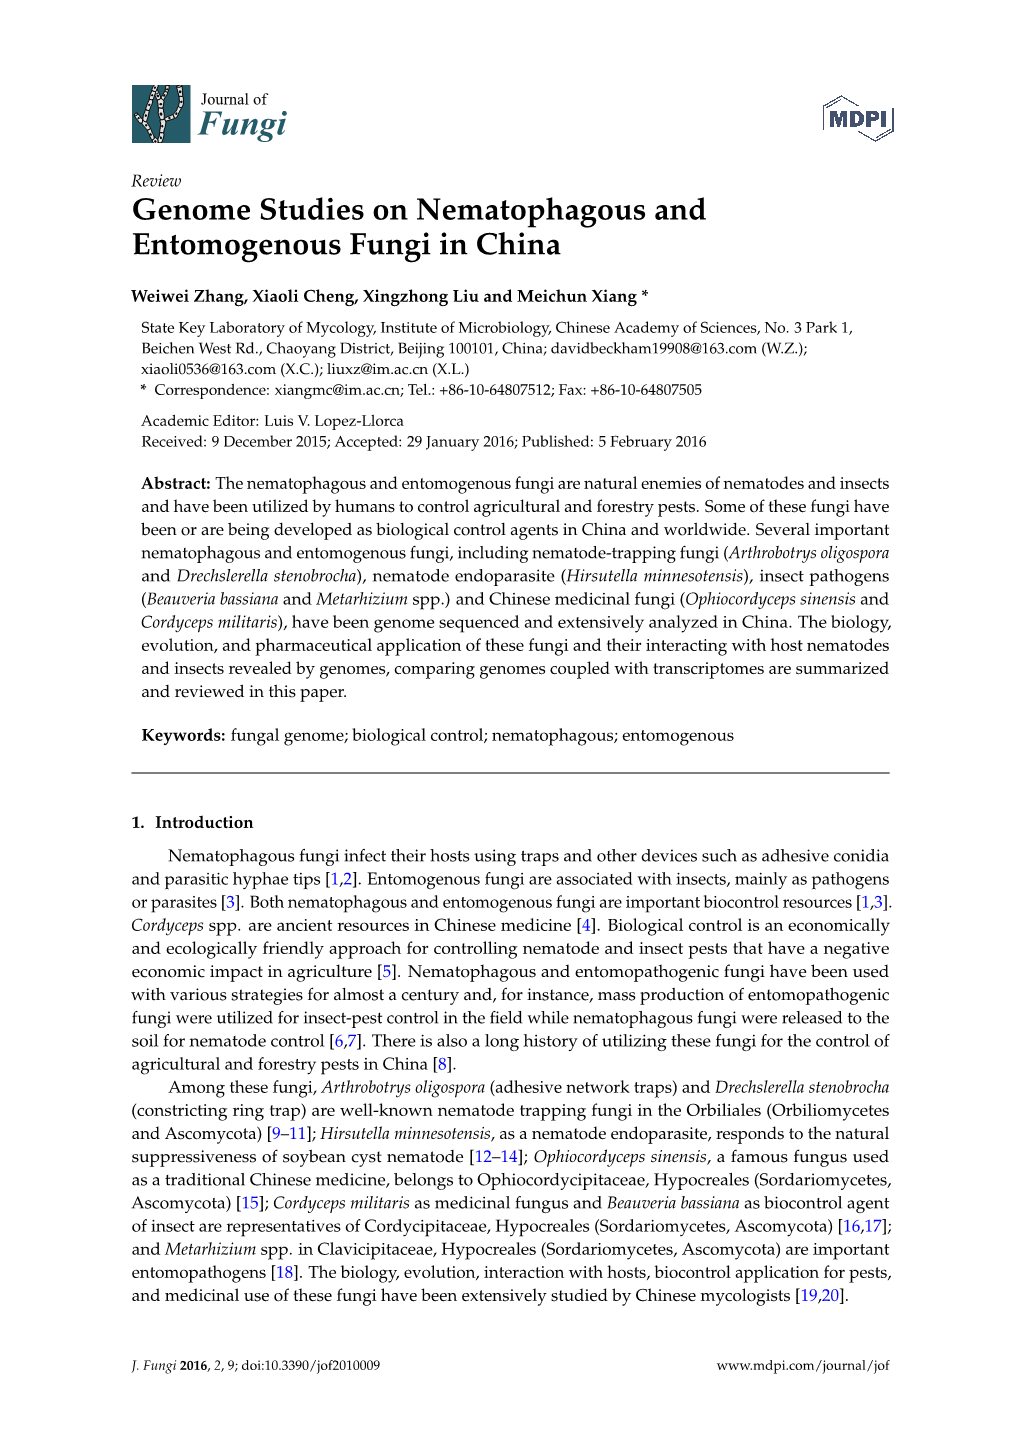 Genome Studies on Nematophagous and Entomogenous Fungi in China